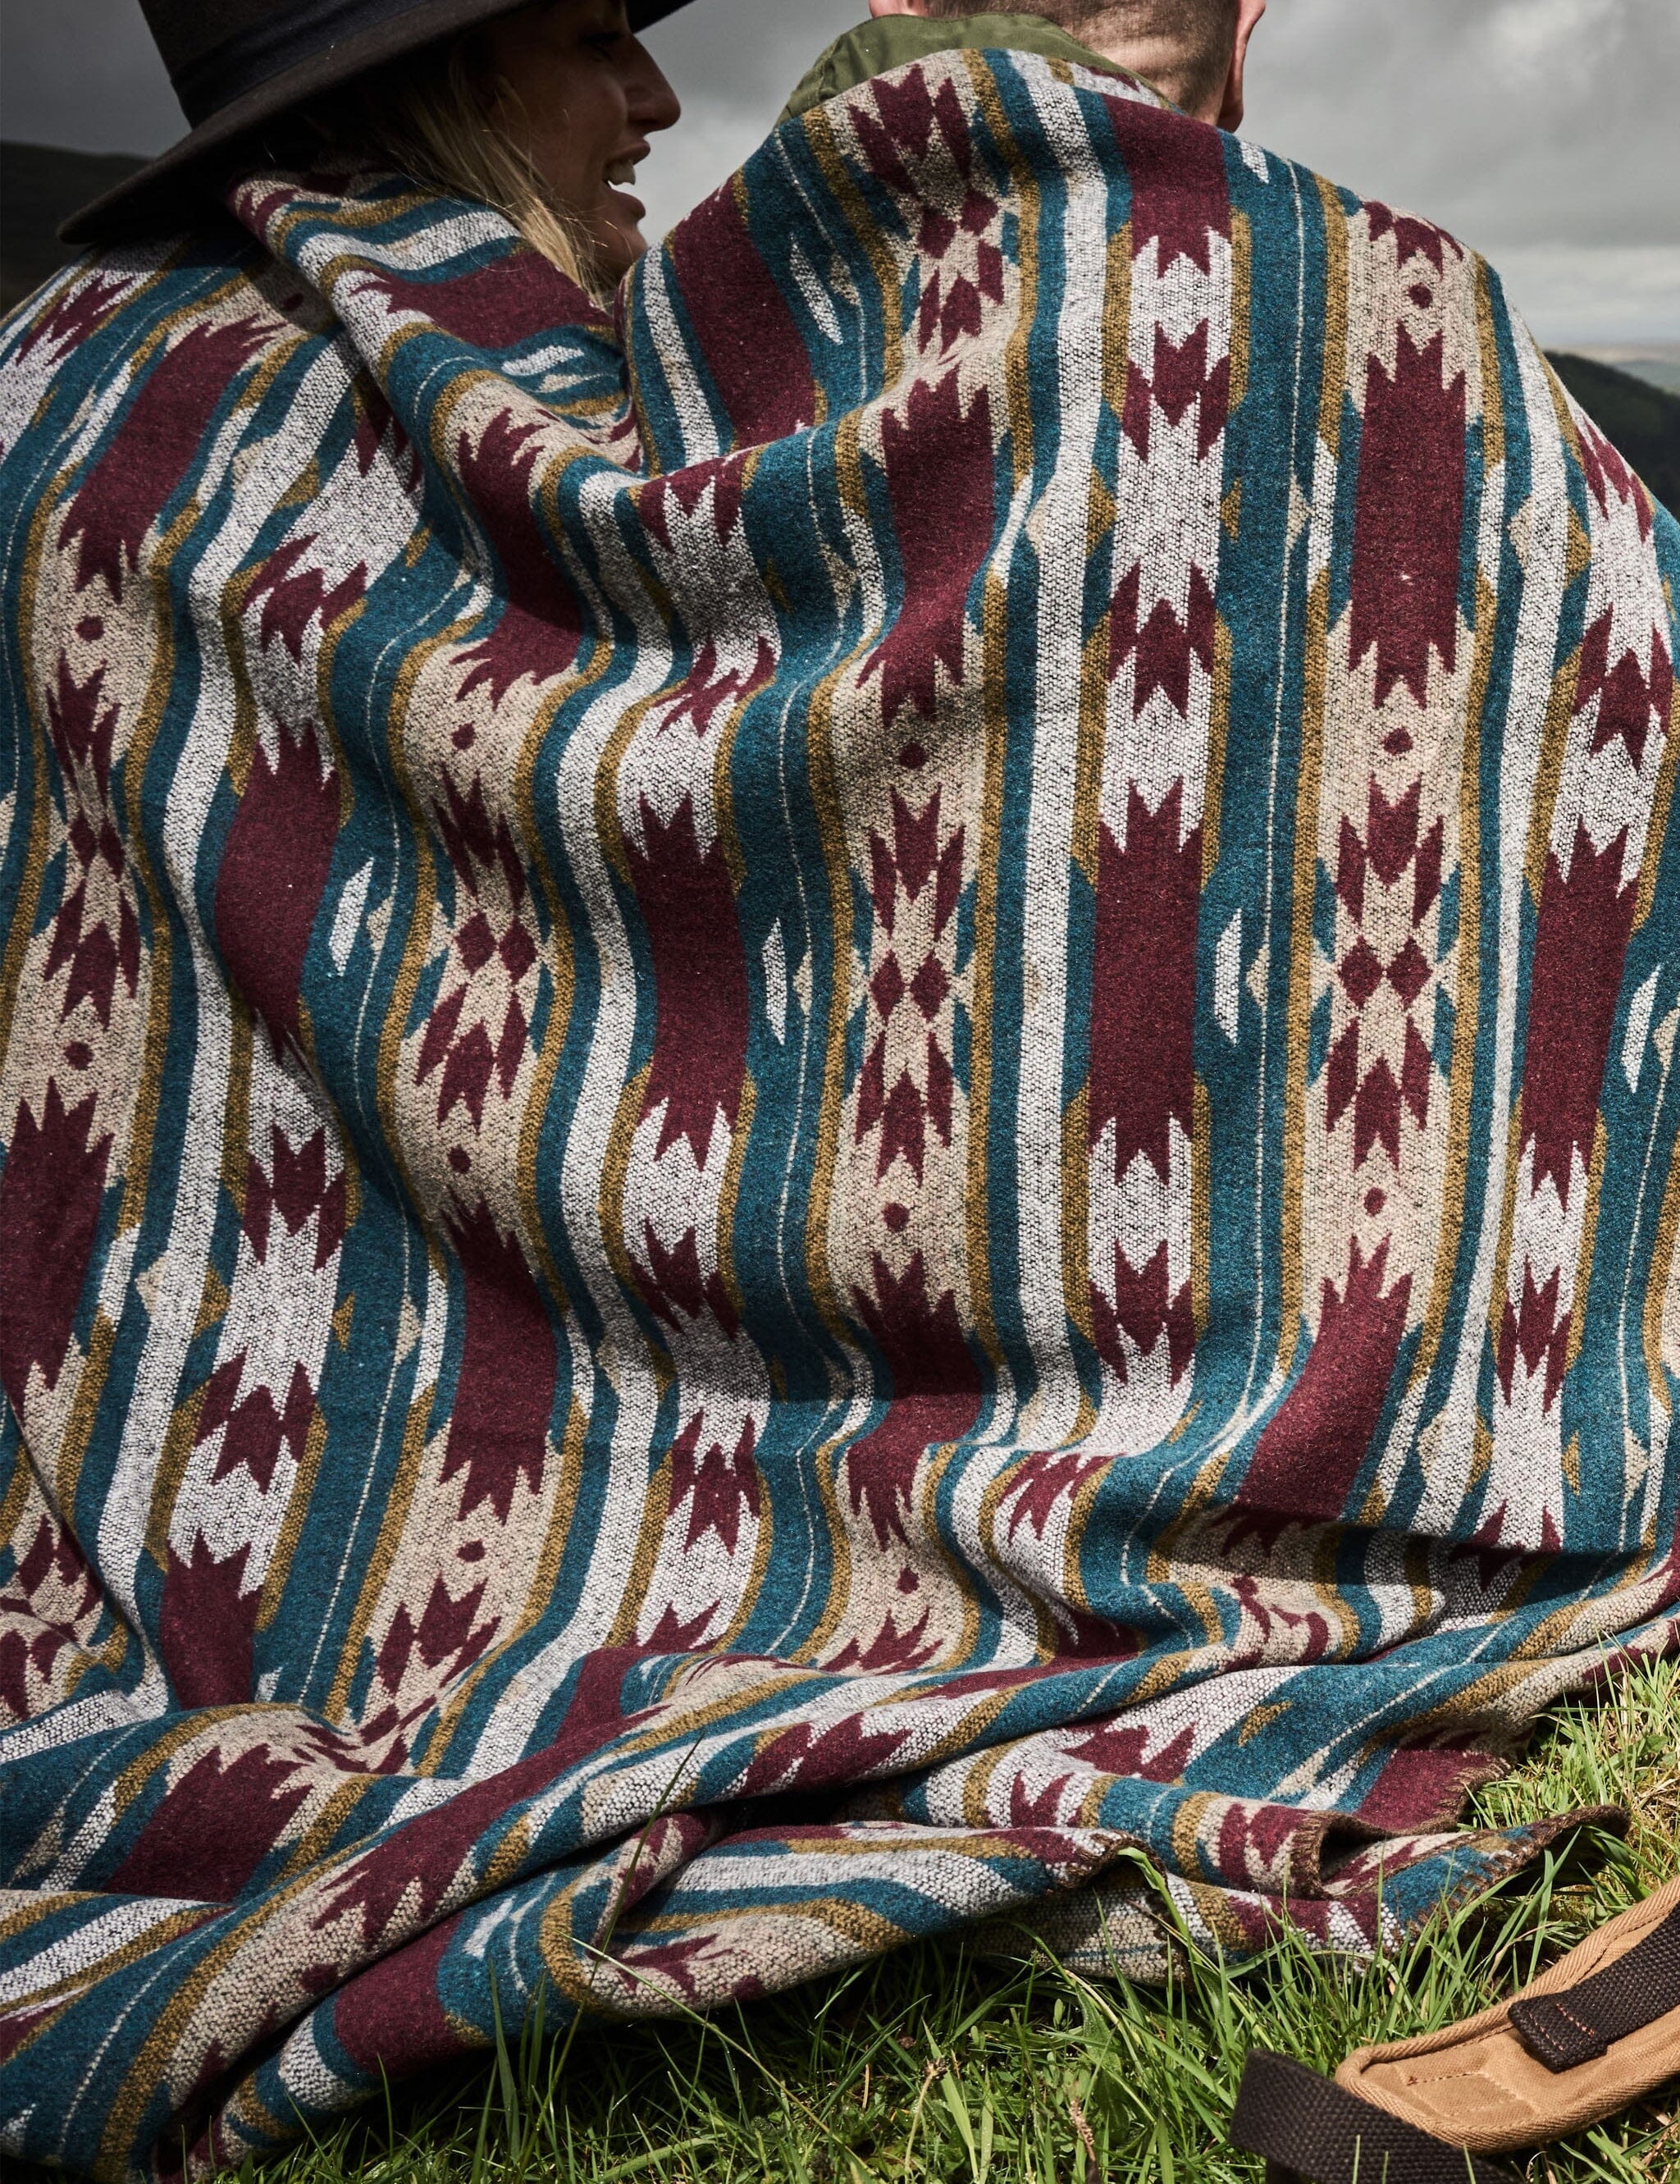 Gandys teal artisan blanket